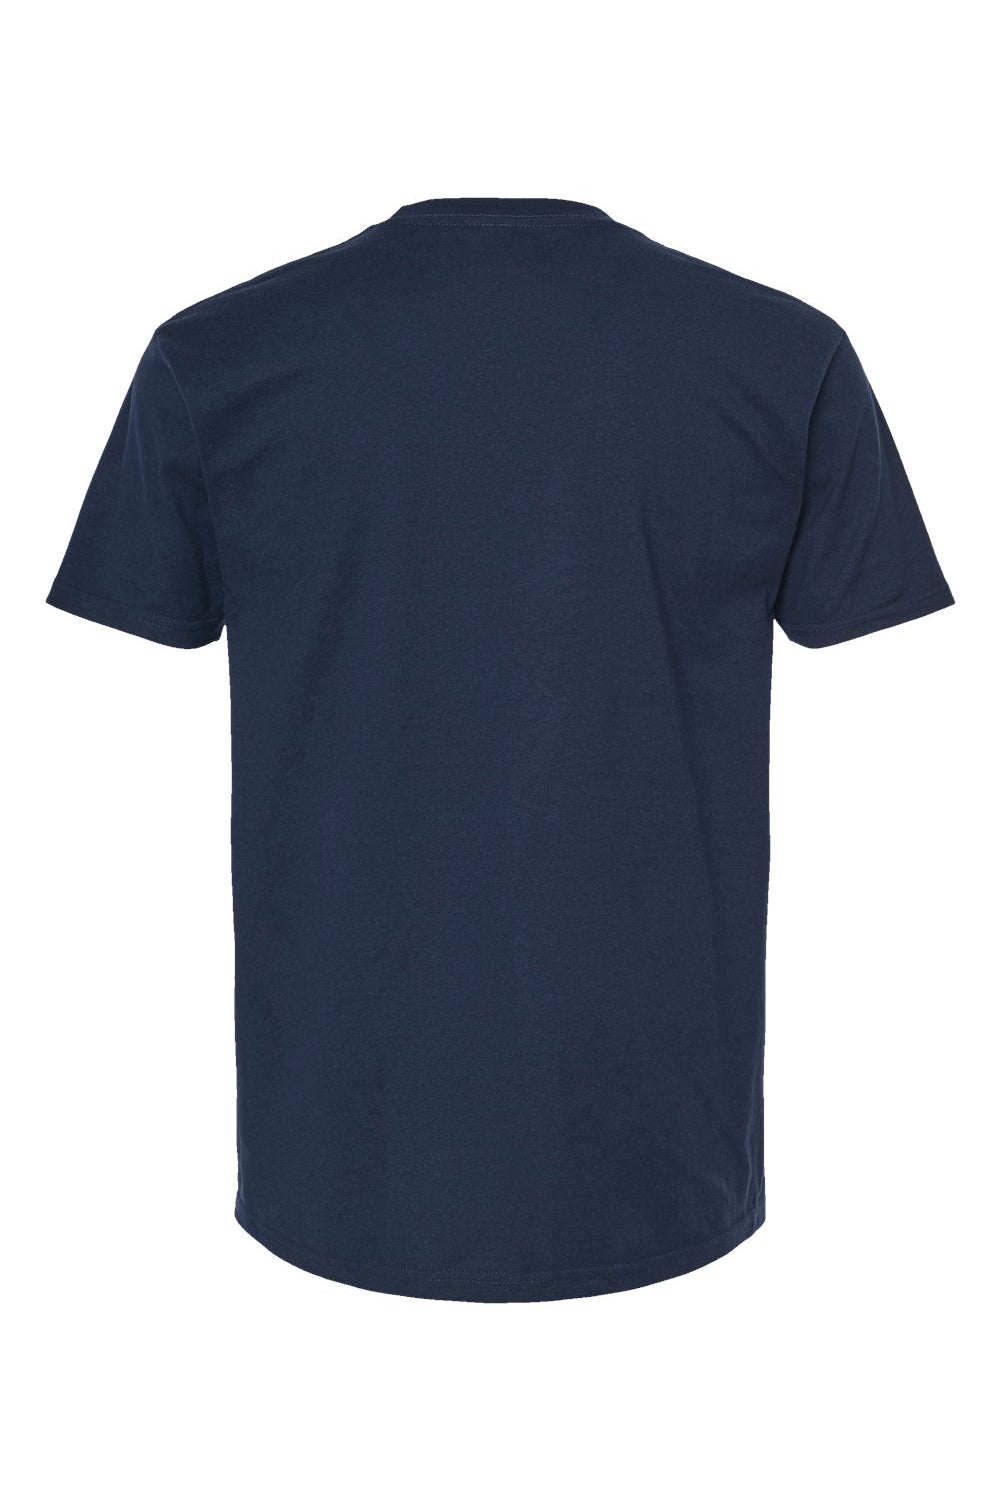 Tultex 293 Mens Jersey Short Sleeve Crewneck T-Shirt w/ Pocket Navy Blue Flat Back